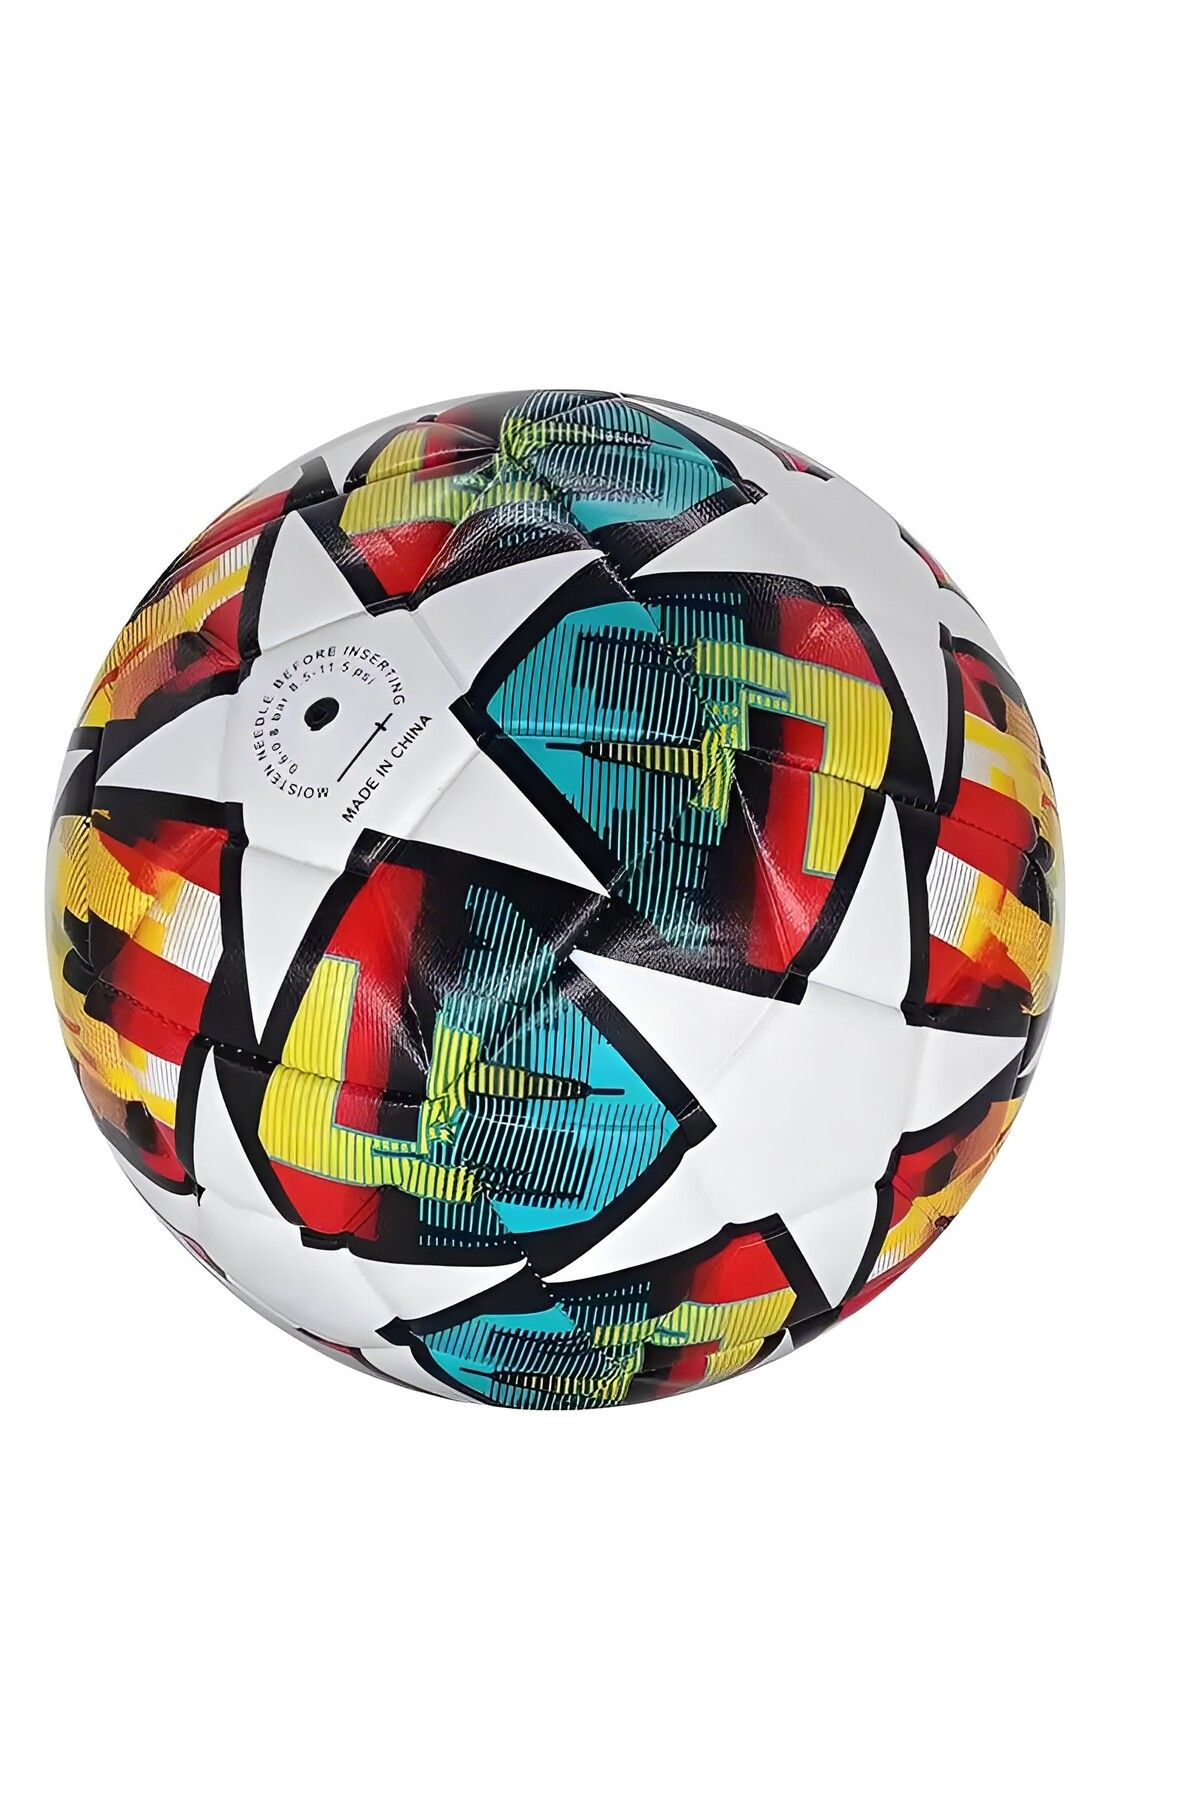 Hisar 4 Astarlı Sert Zemin Futbol Topu Halı Saha Topu Maç Topu 420gr